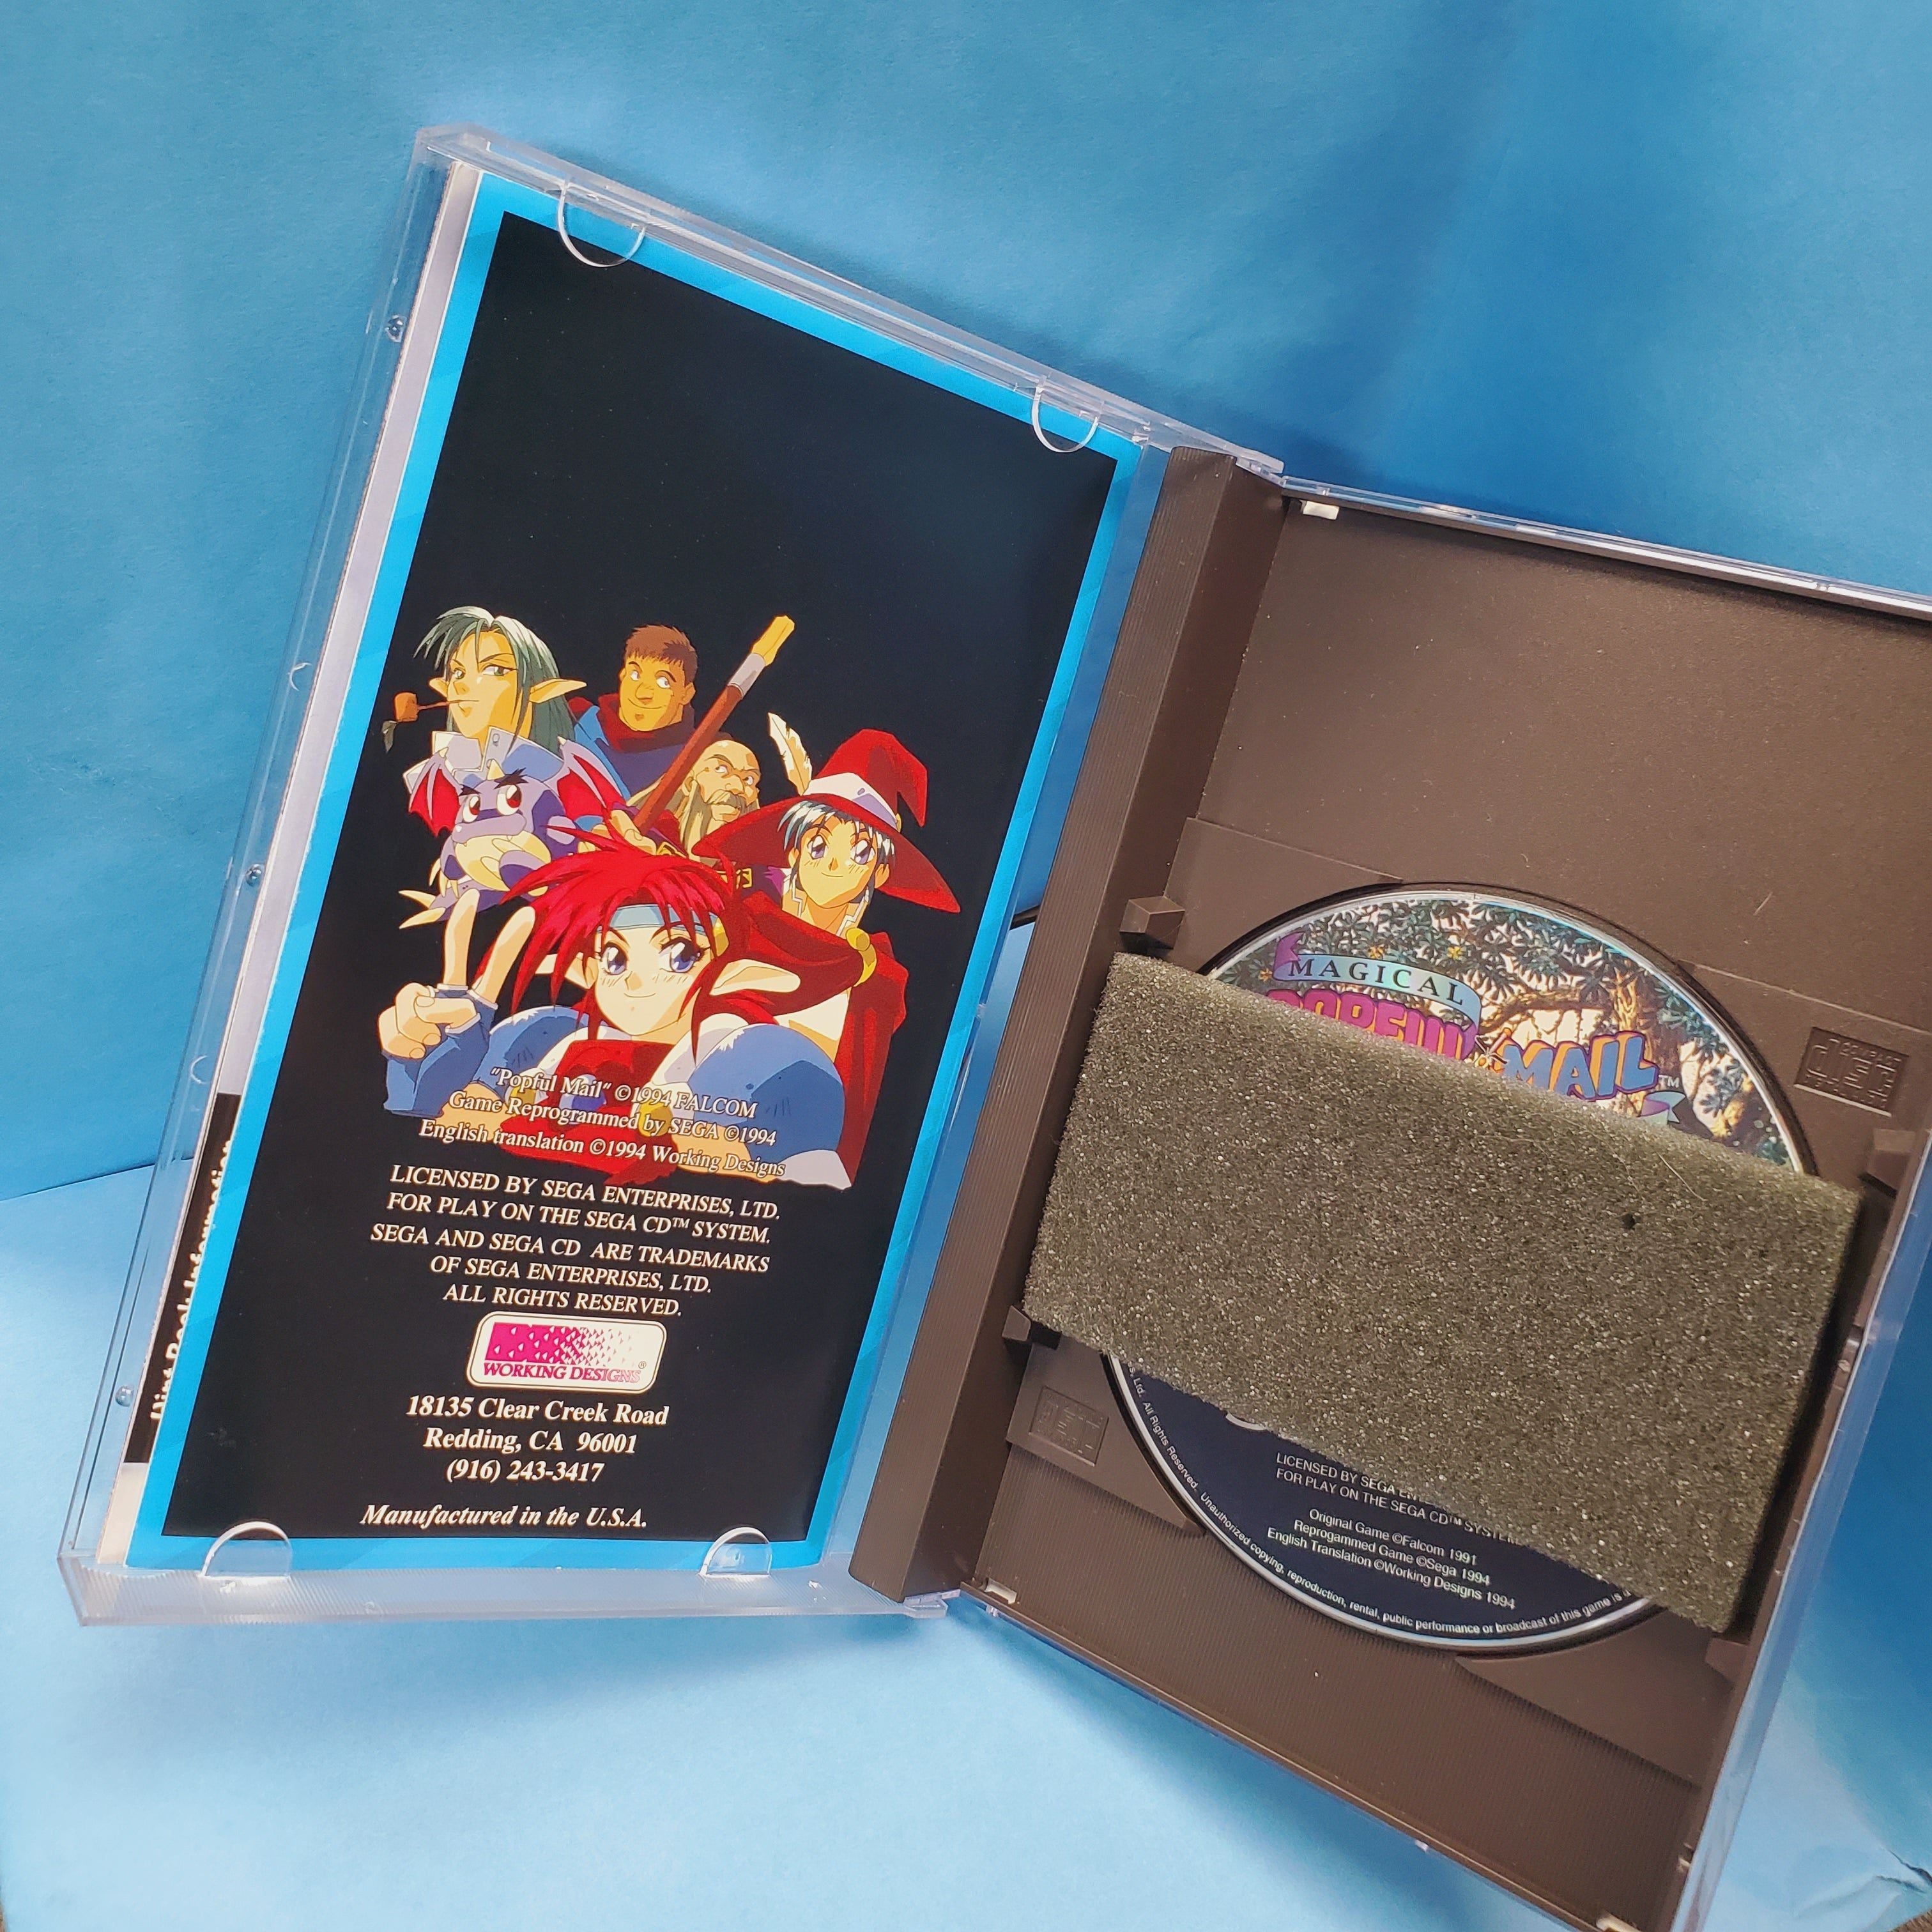 Sega CD - Popful Mail Magical Fantasy Adventure (complet)